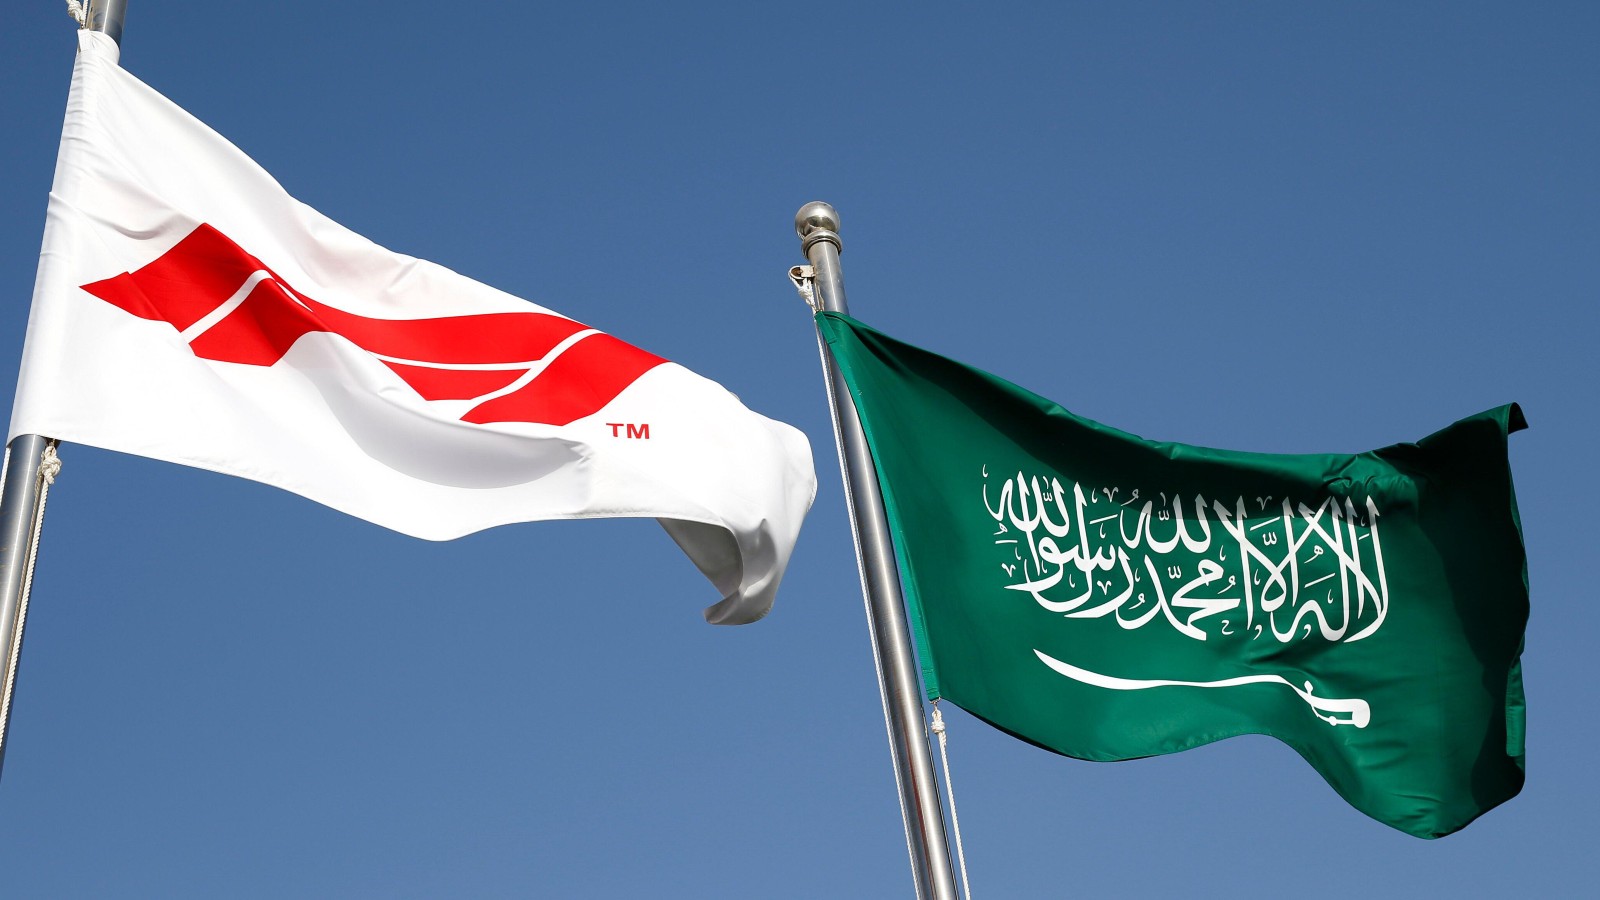 The Formula 1 and Saudi Arabia flags. Saudi Arabia, March 2022.